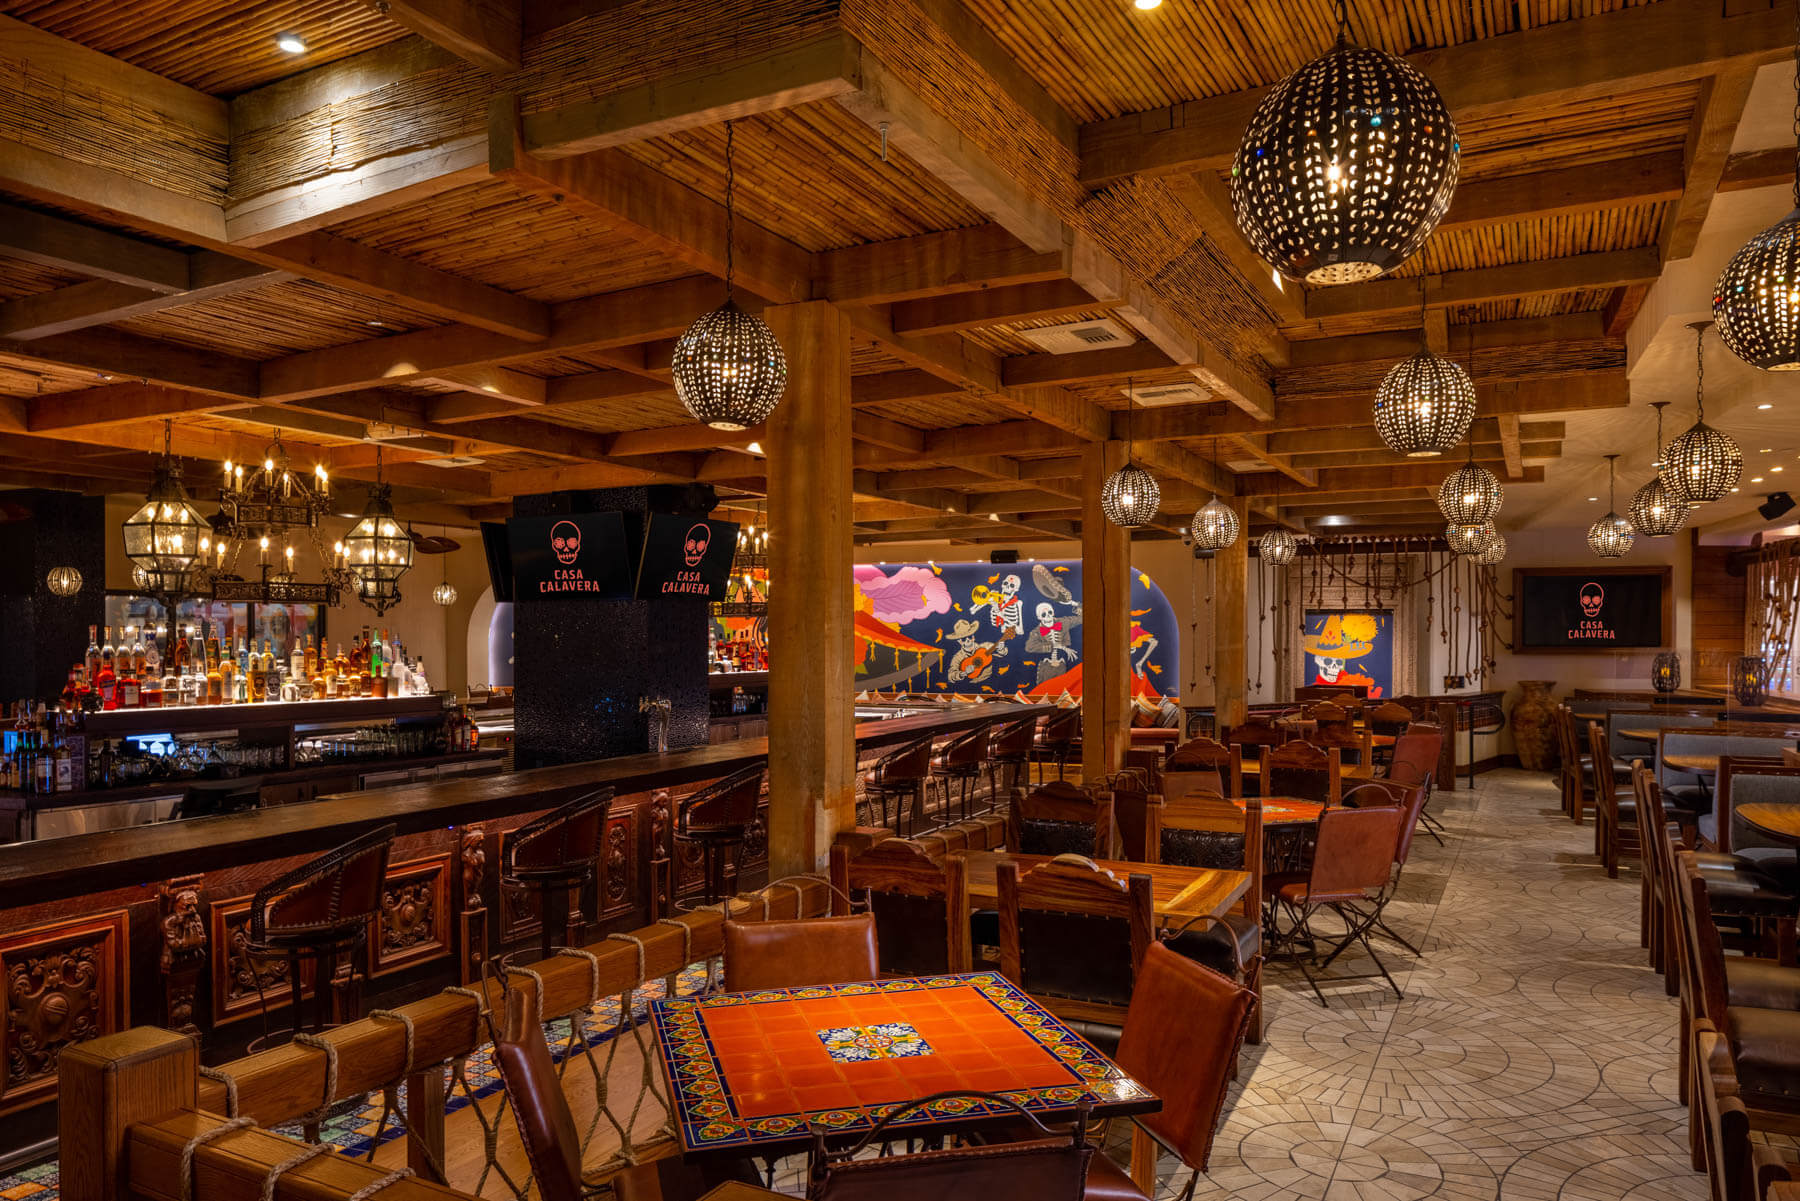 Restaurant Interior with Bar